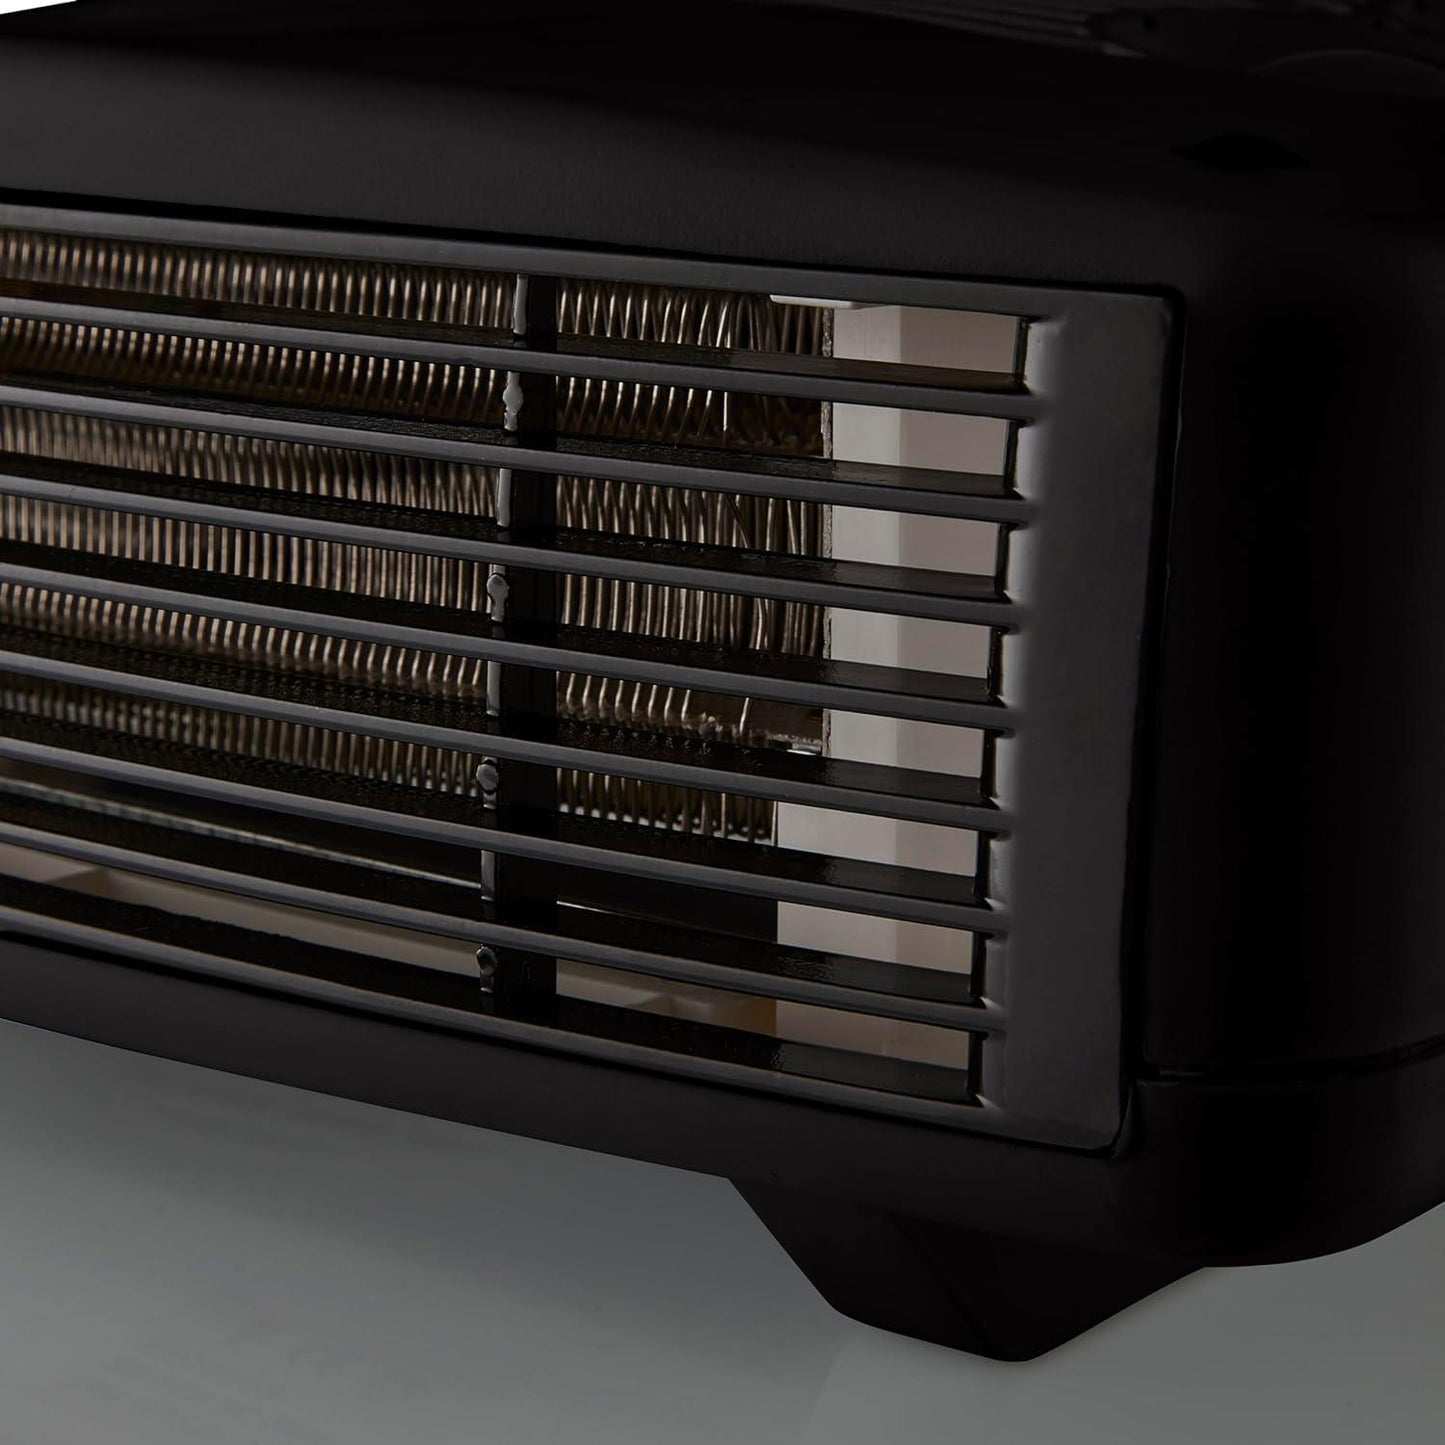 Swan Horizontal Fan Heater with 2 Heat Settings, Adjustable Thermostat, 3000W, Black